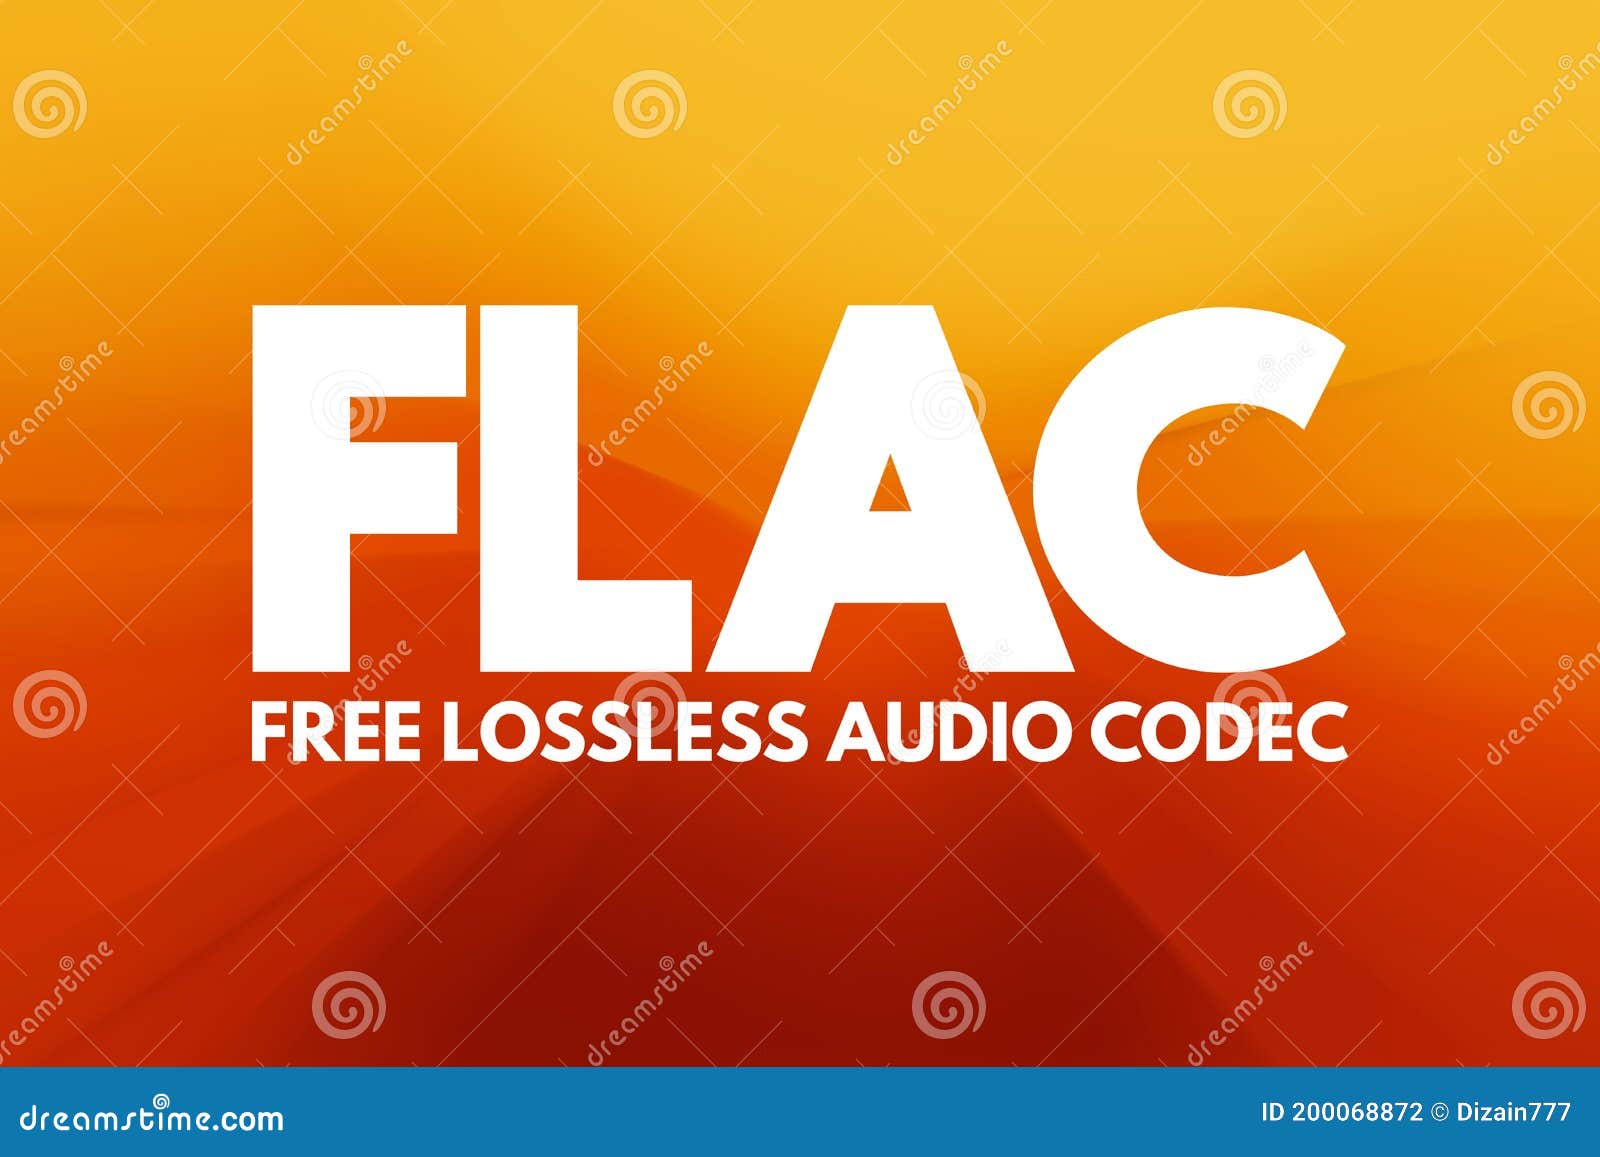 Сайт flac. FLAC. Flar. FLAC file. Минимальное качество FLAC.